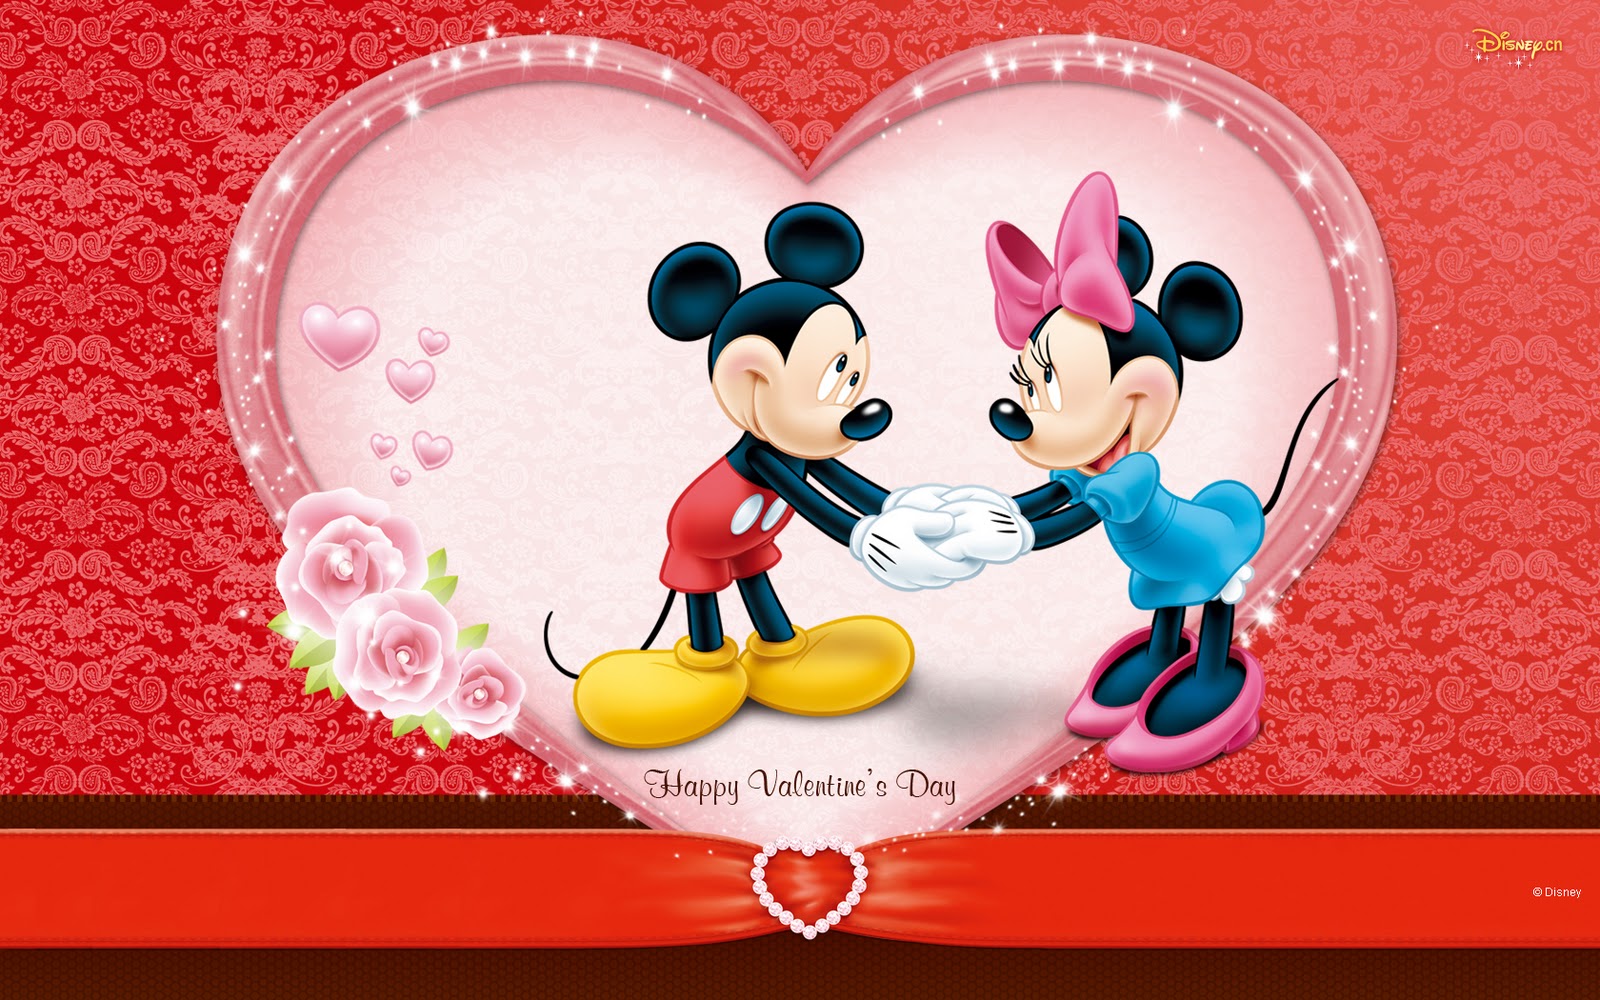 Disney Happy Valentiines Day Desktop Wallpaper Jpg